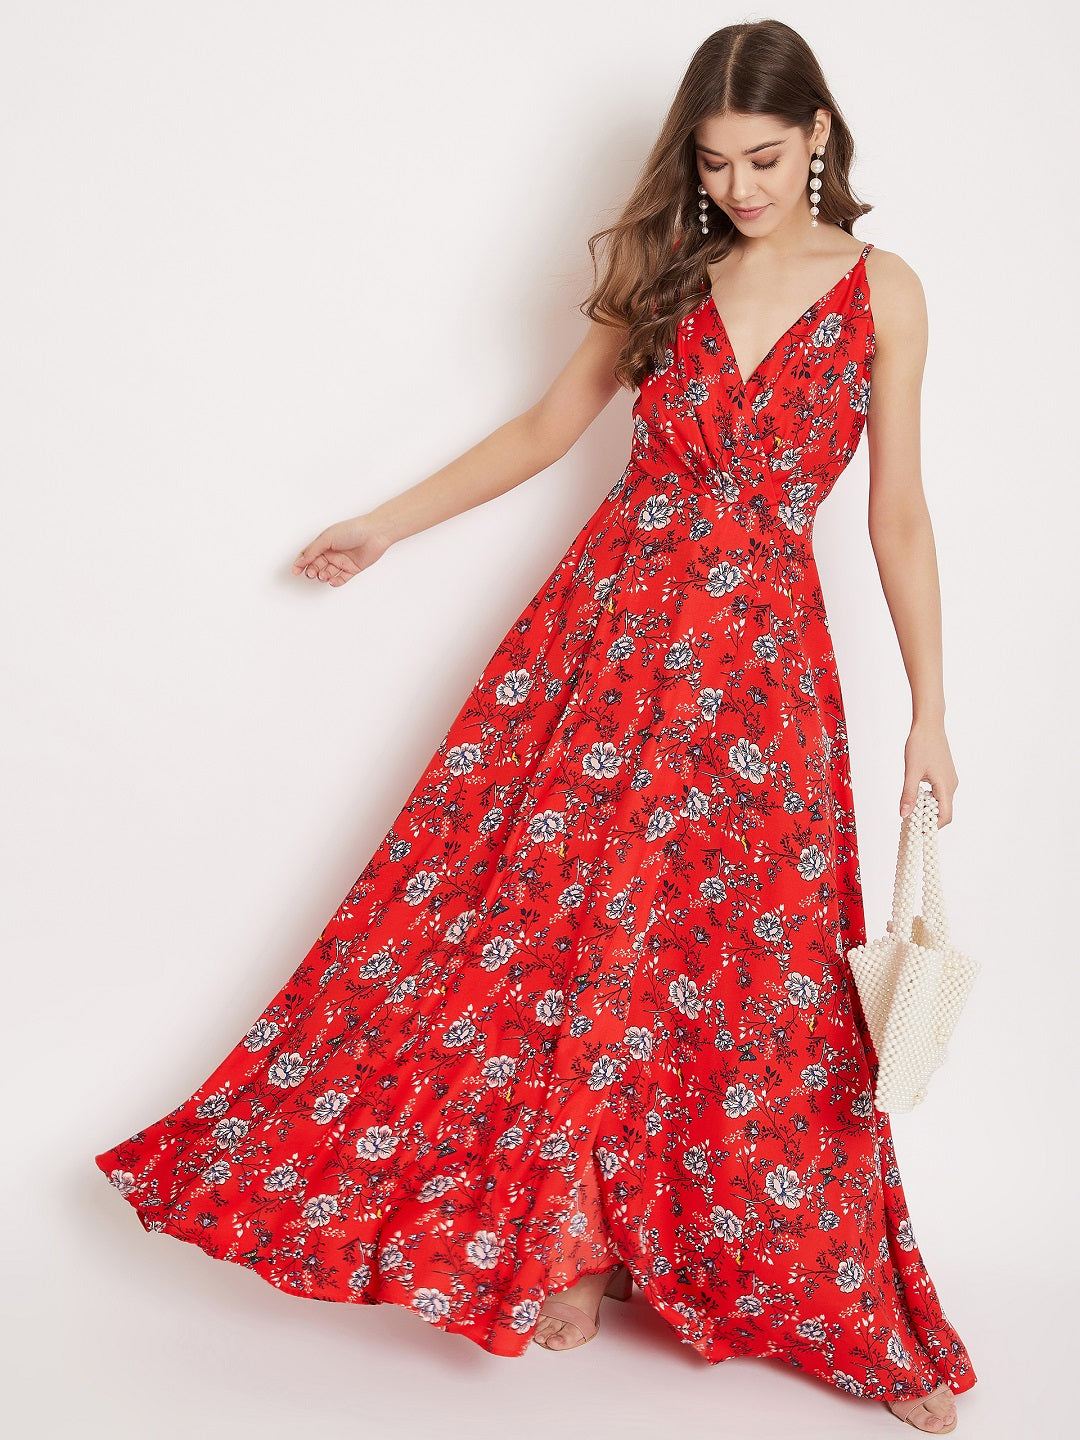 Berrylush Women Red & White Floral Printed V-Neck Thigh-High Slit Flared Maxi Dress